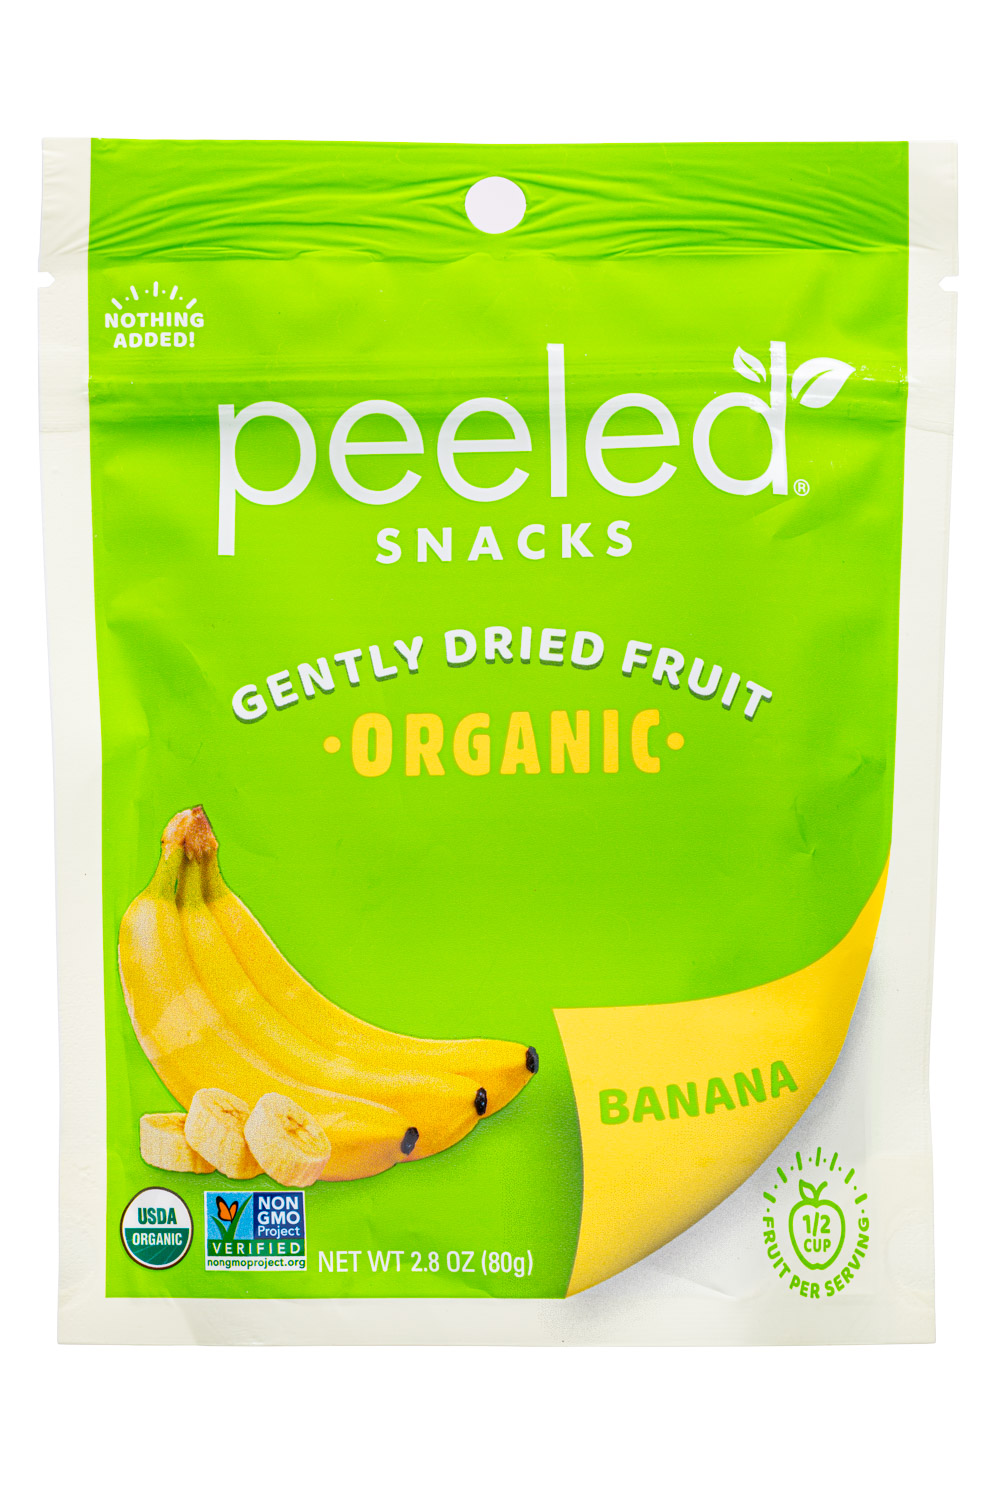 https://images.nosh.com/brands/6561487.peeledsnacks-3oz-driedfruit-banana-front.jpg